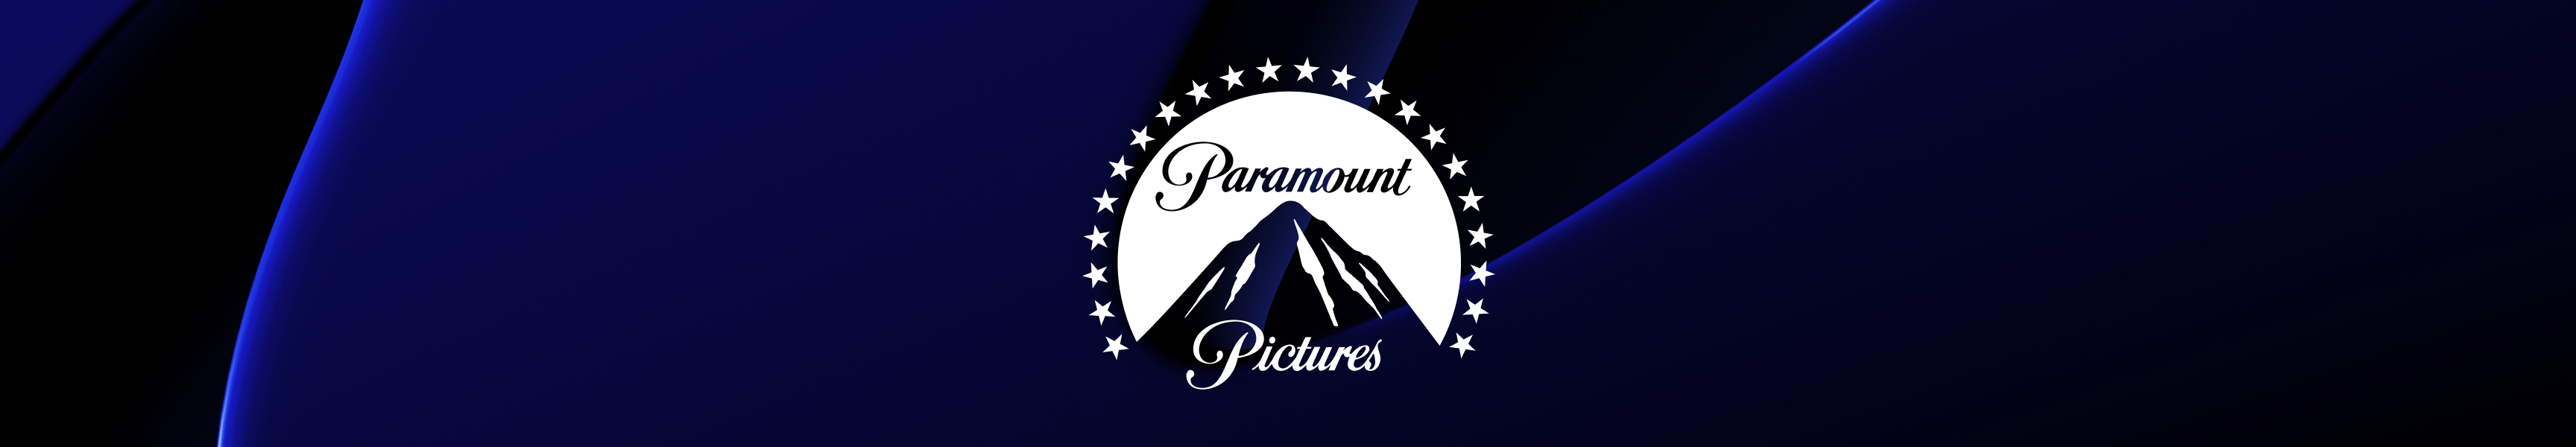 Paramount Pictures Accessoires